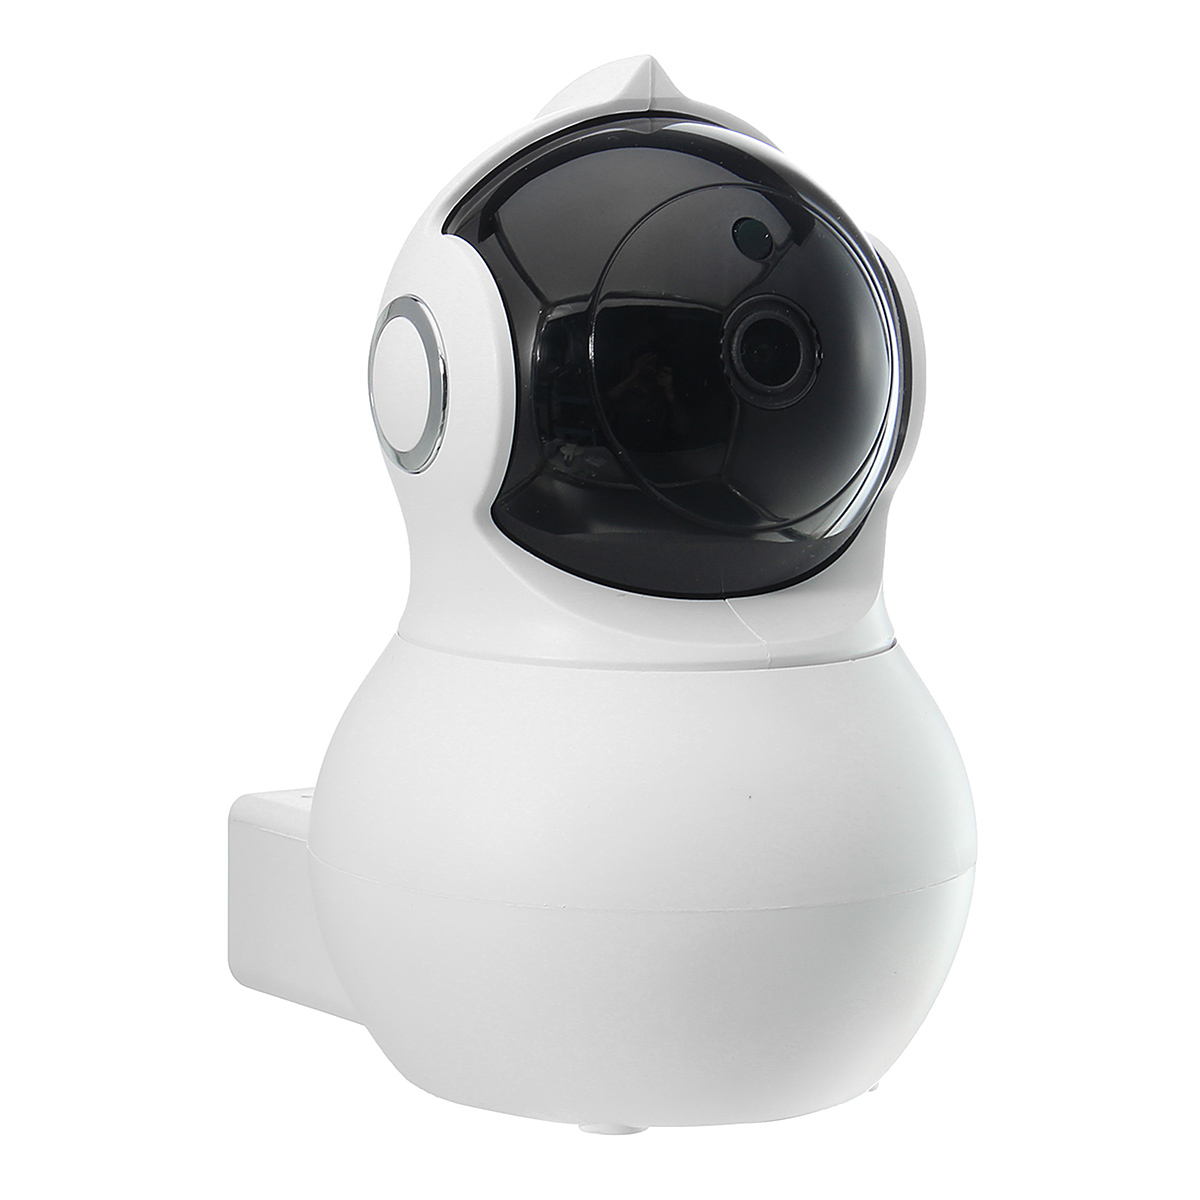 Q8 Home Security 1080P HD IP Camrea Wireless Smart WI-FI Audio CCTV Camera Webcam 44